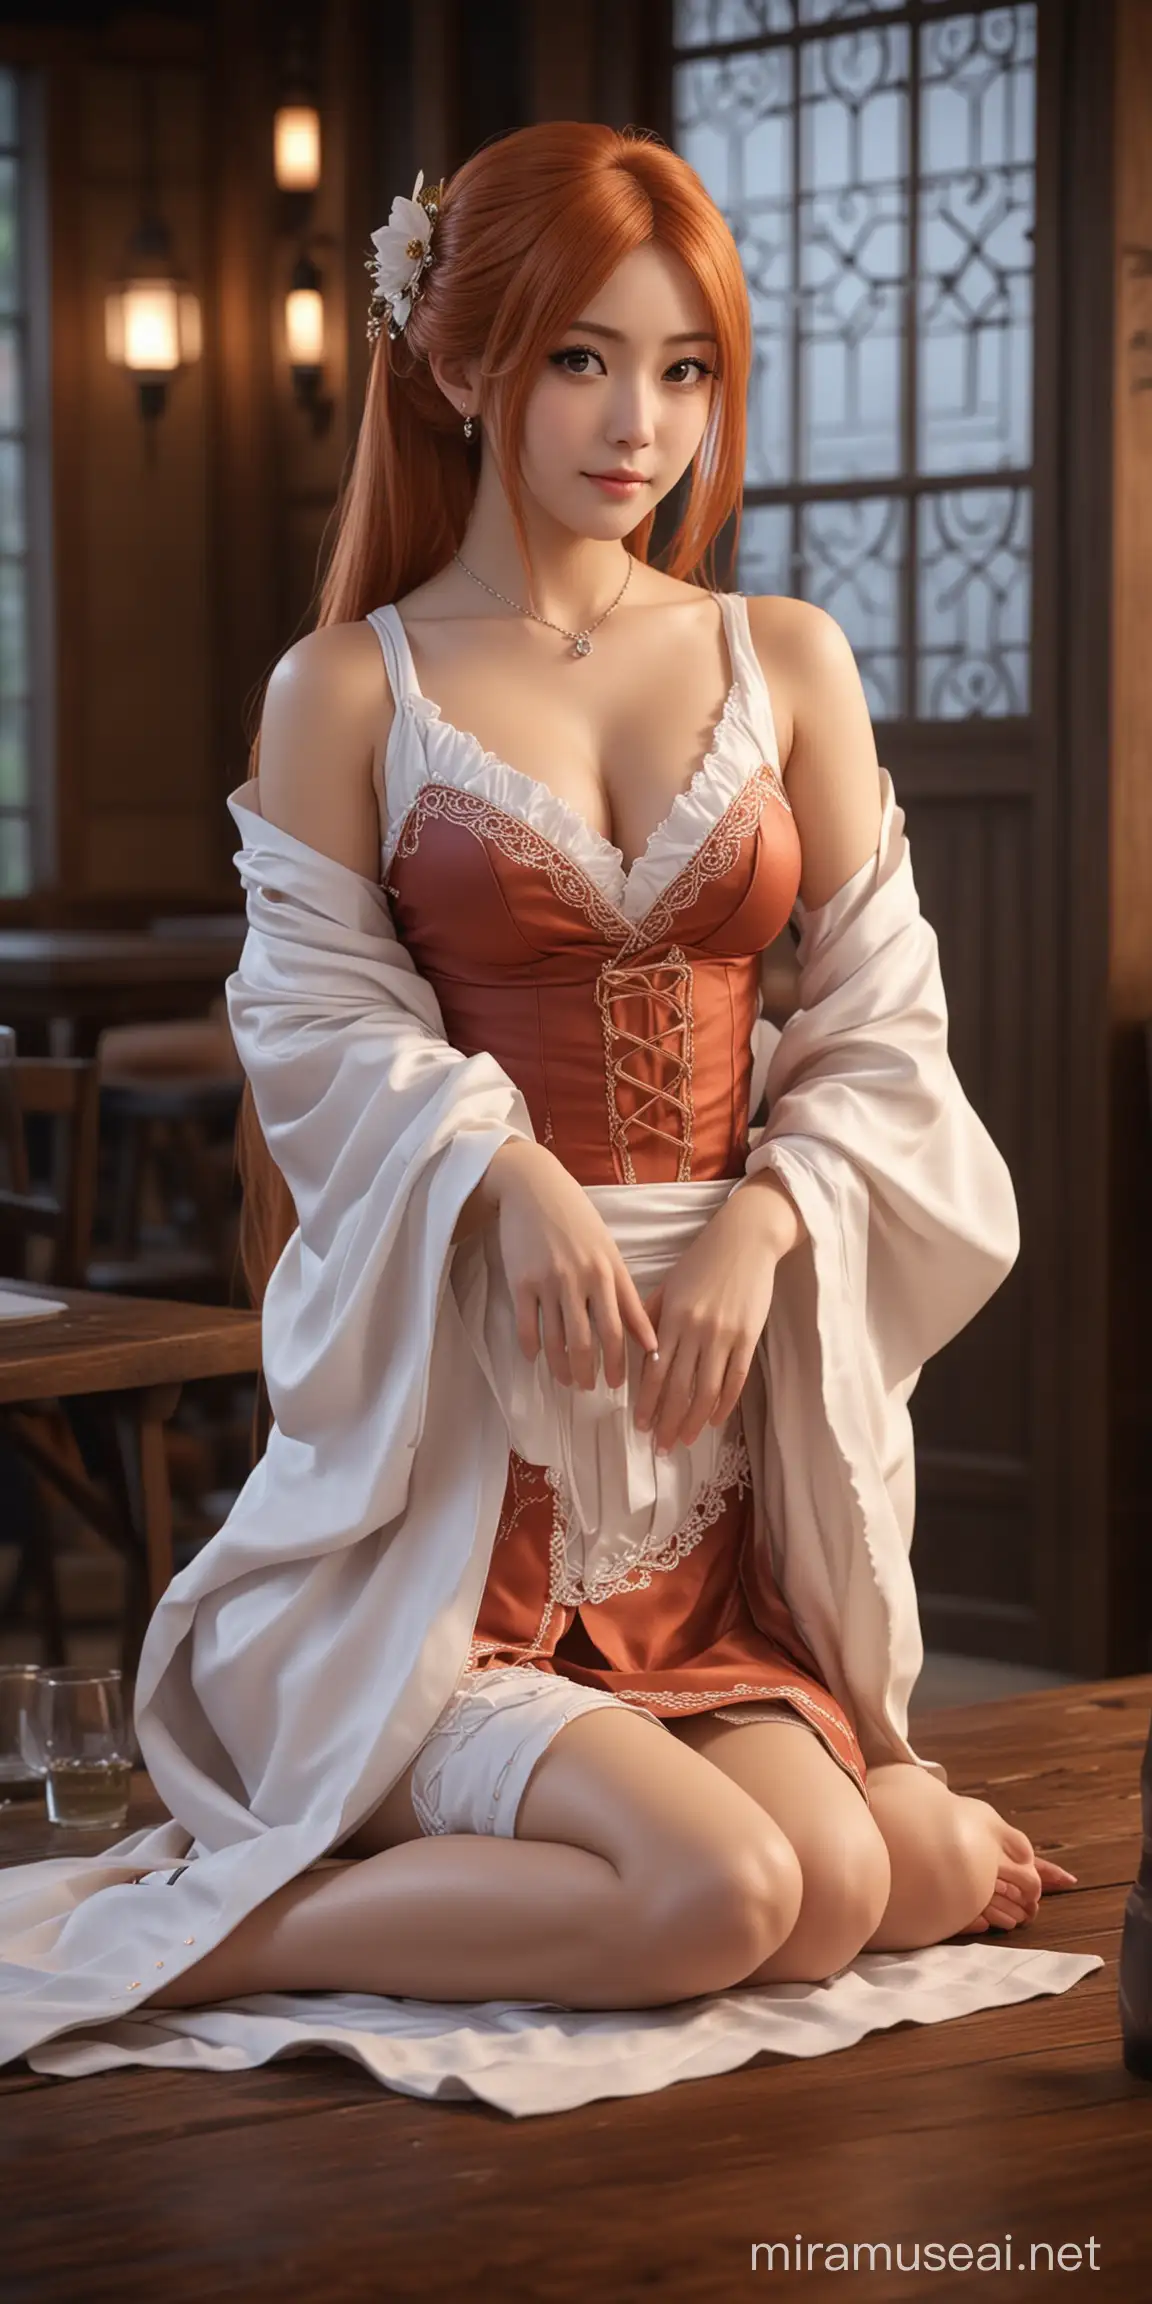 Elegant Enchantress Orihime Inoue Fantasy Isekai Tavern Scene